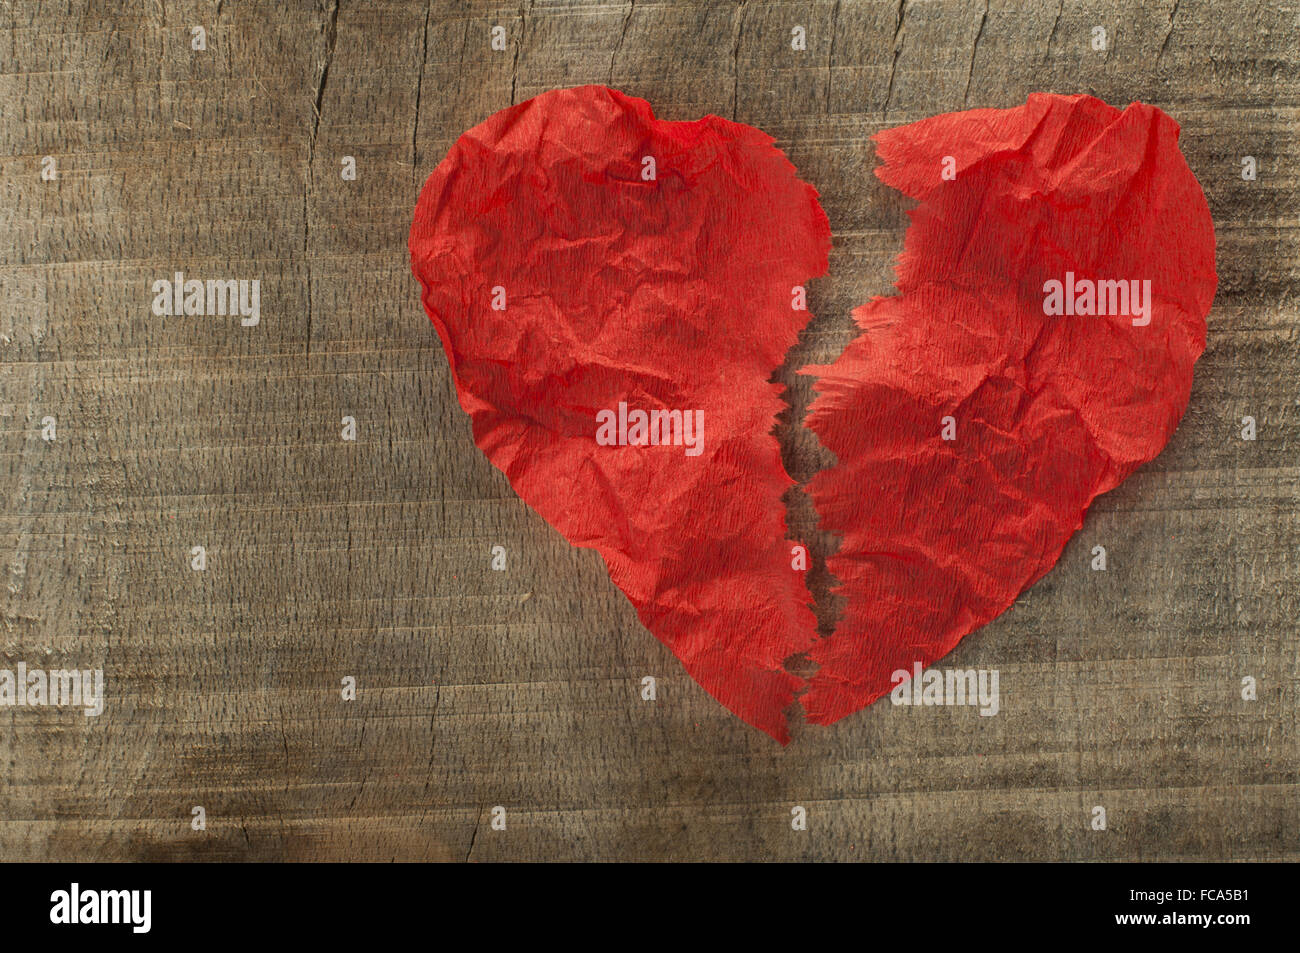 Heartbreak made ΓÇïΓÇïof curled red paper Stock Photo